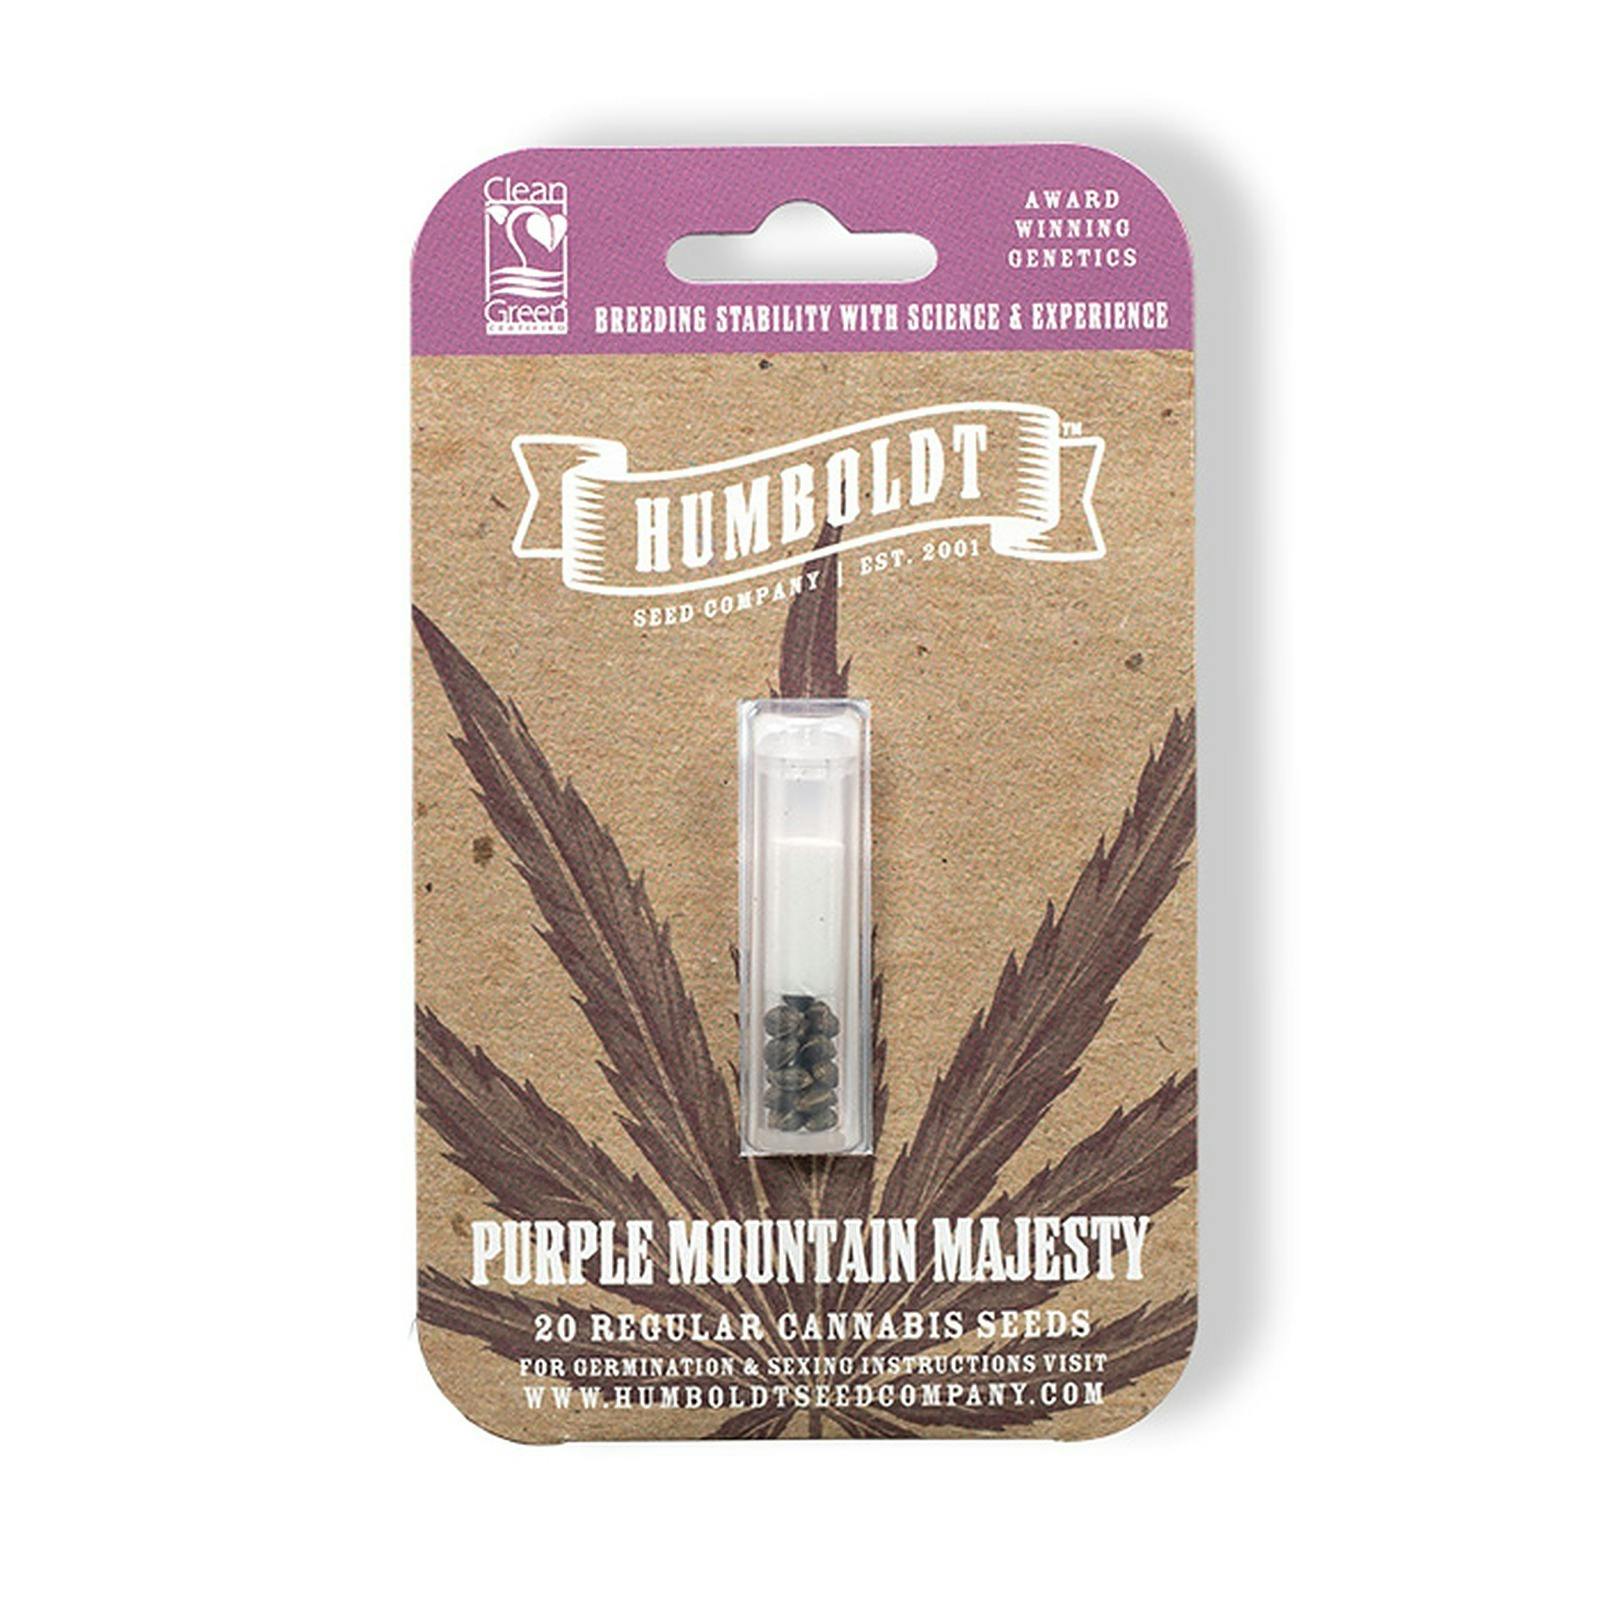 Purple mountain majesty seeds